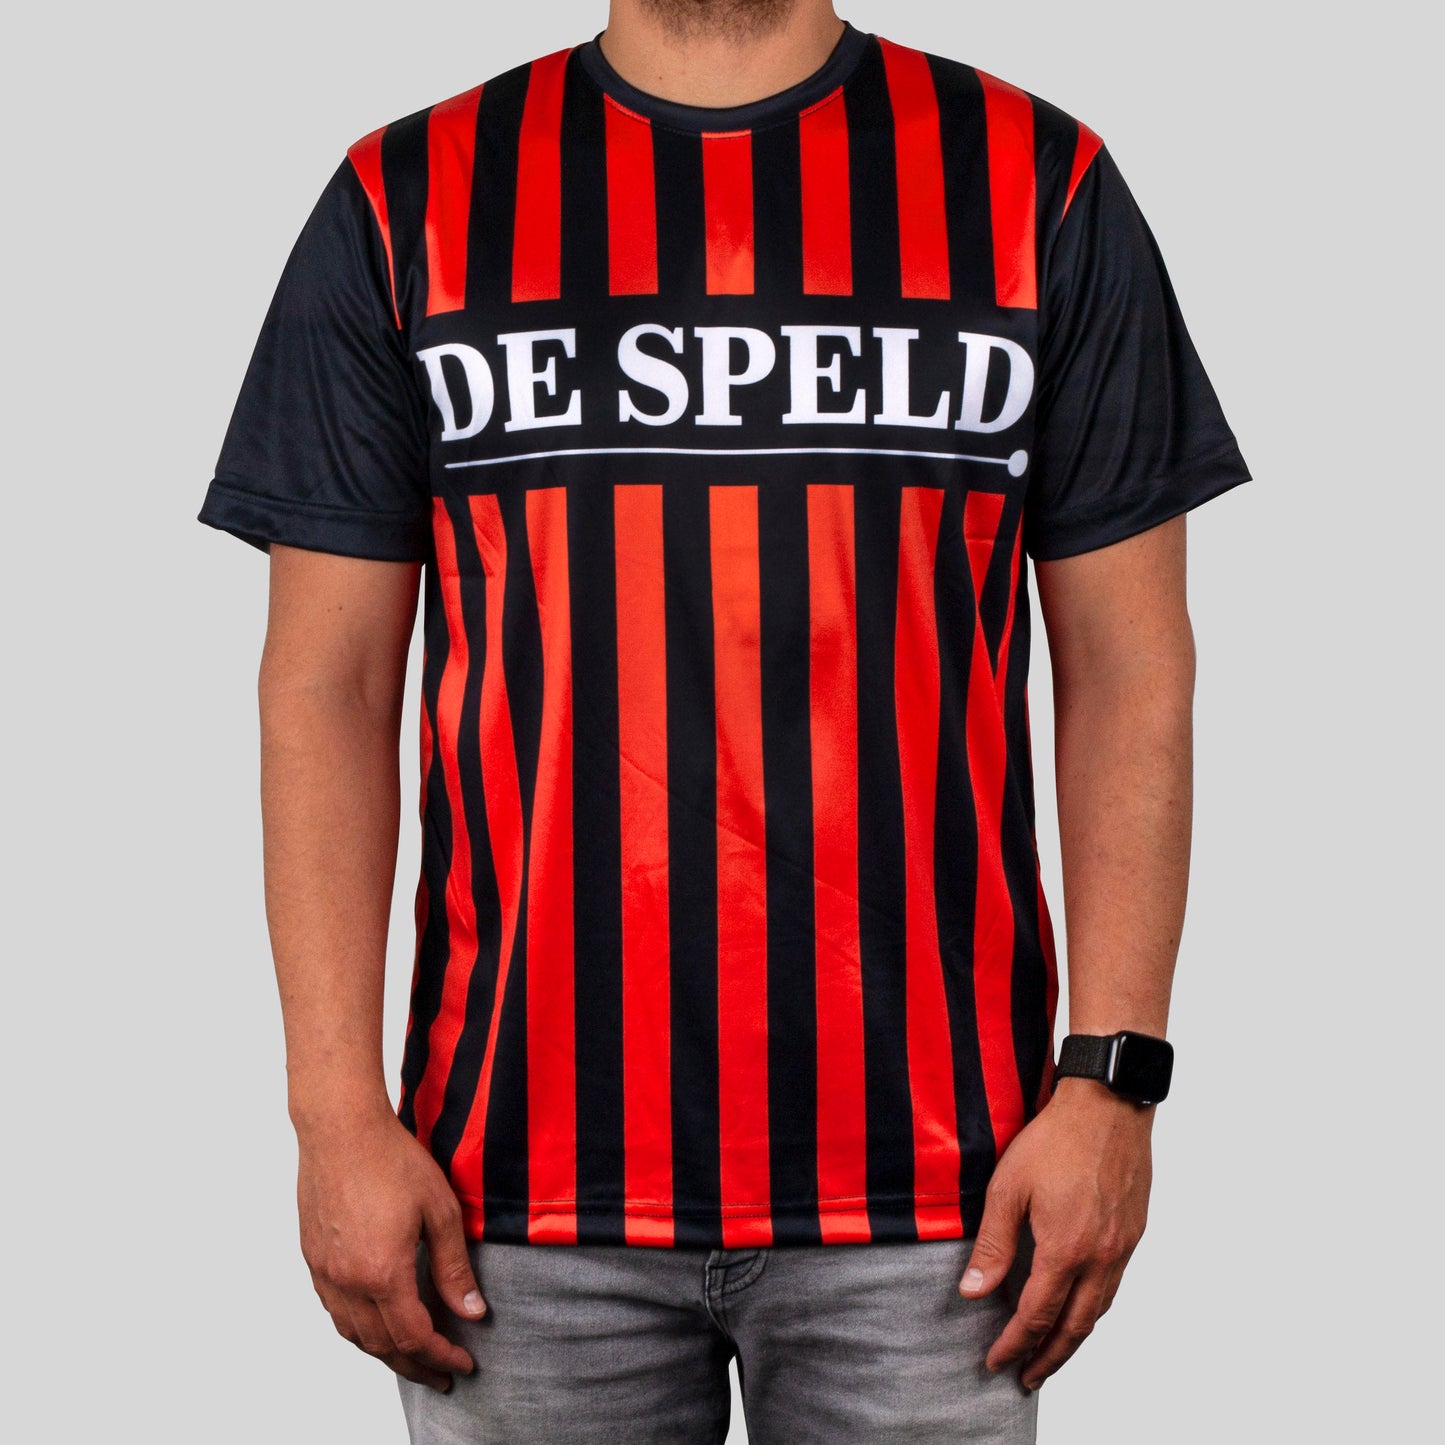 De Speld Oranje shirt - Limited edition